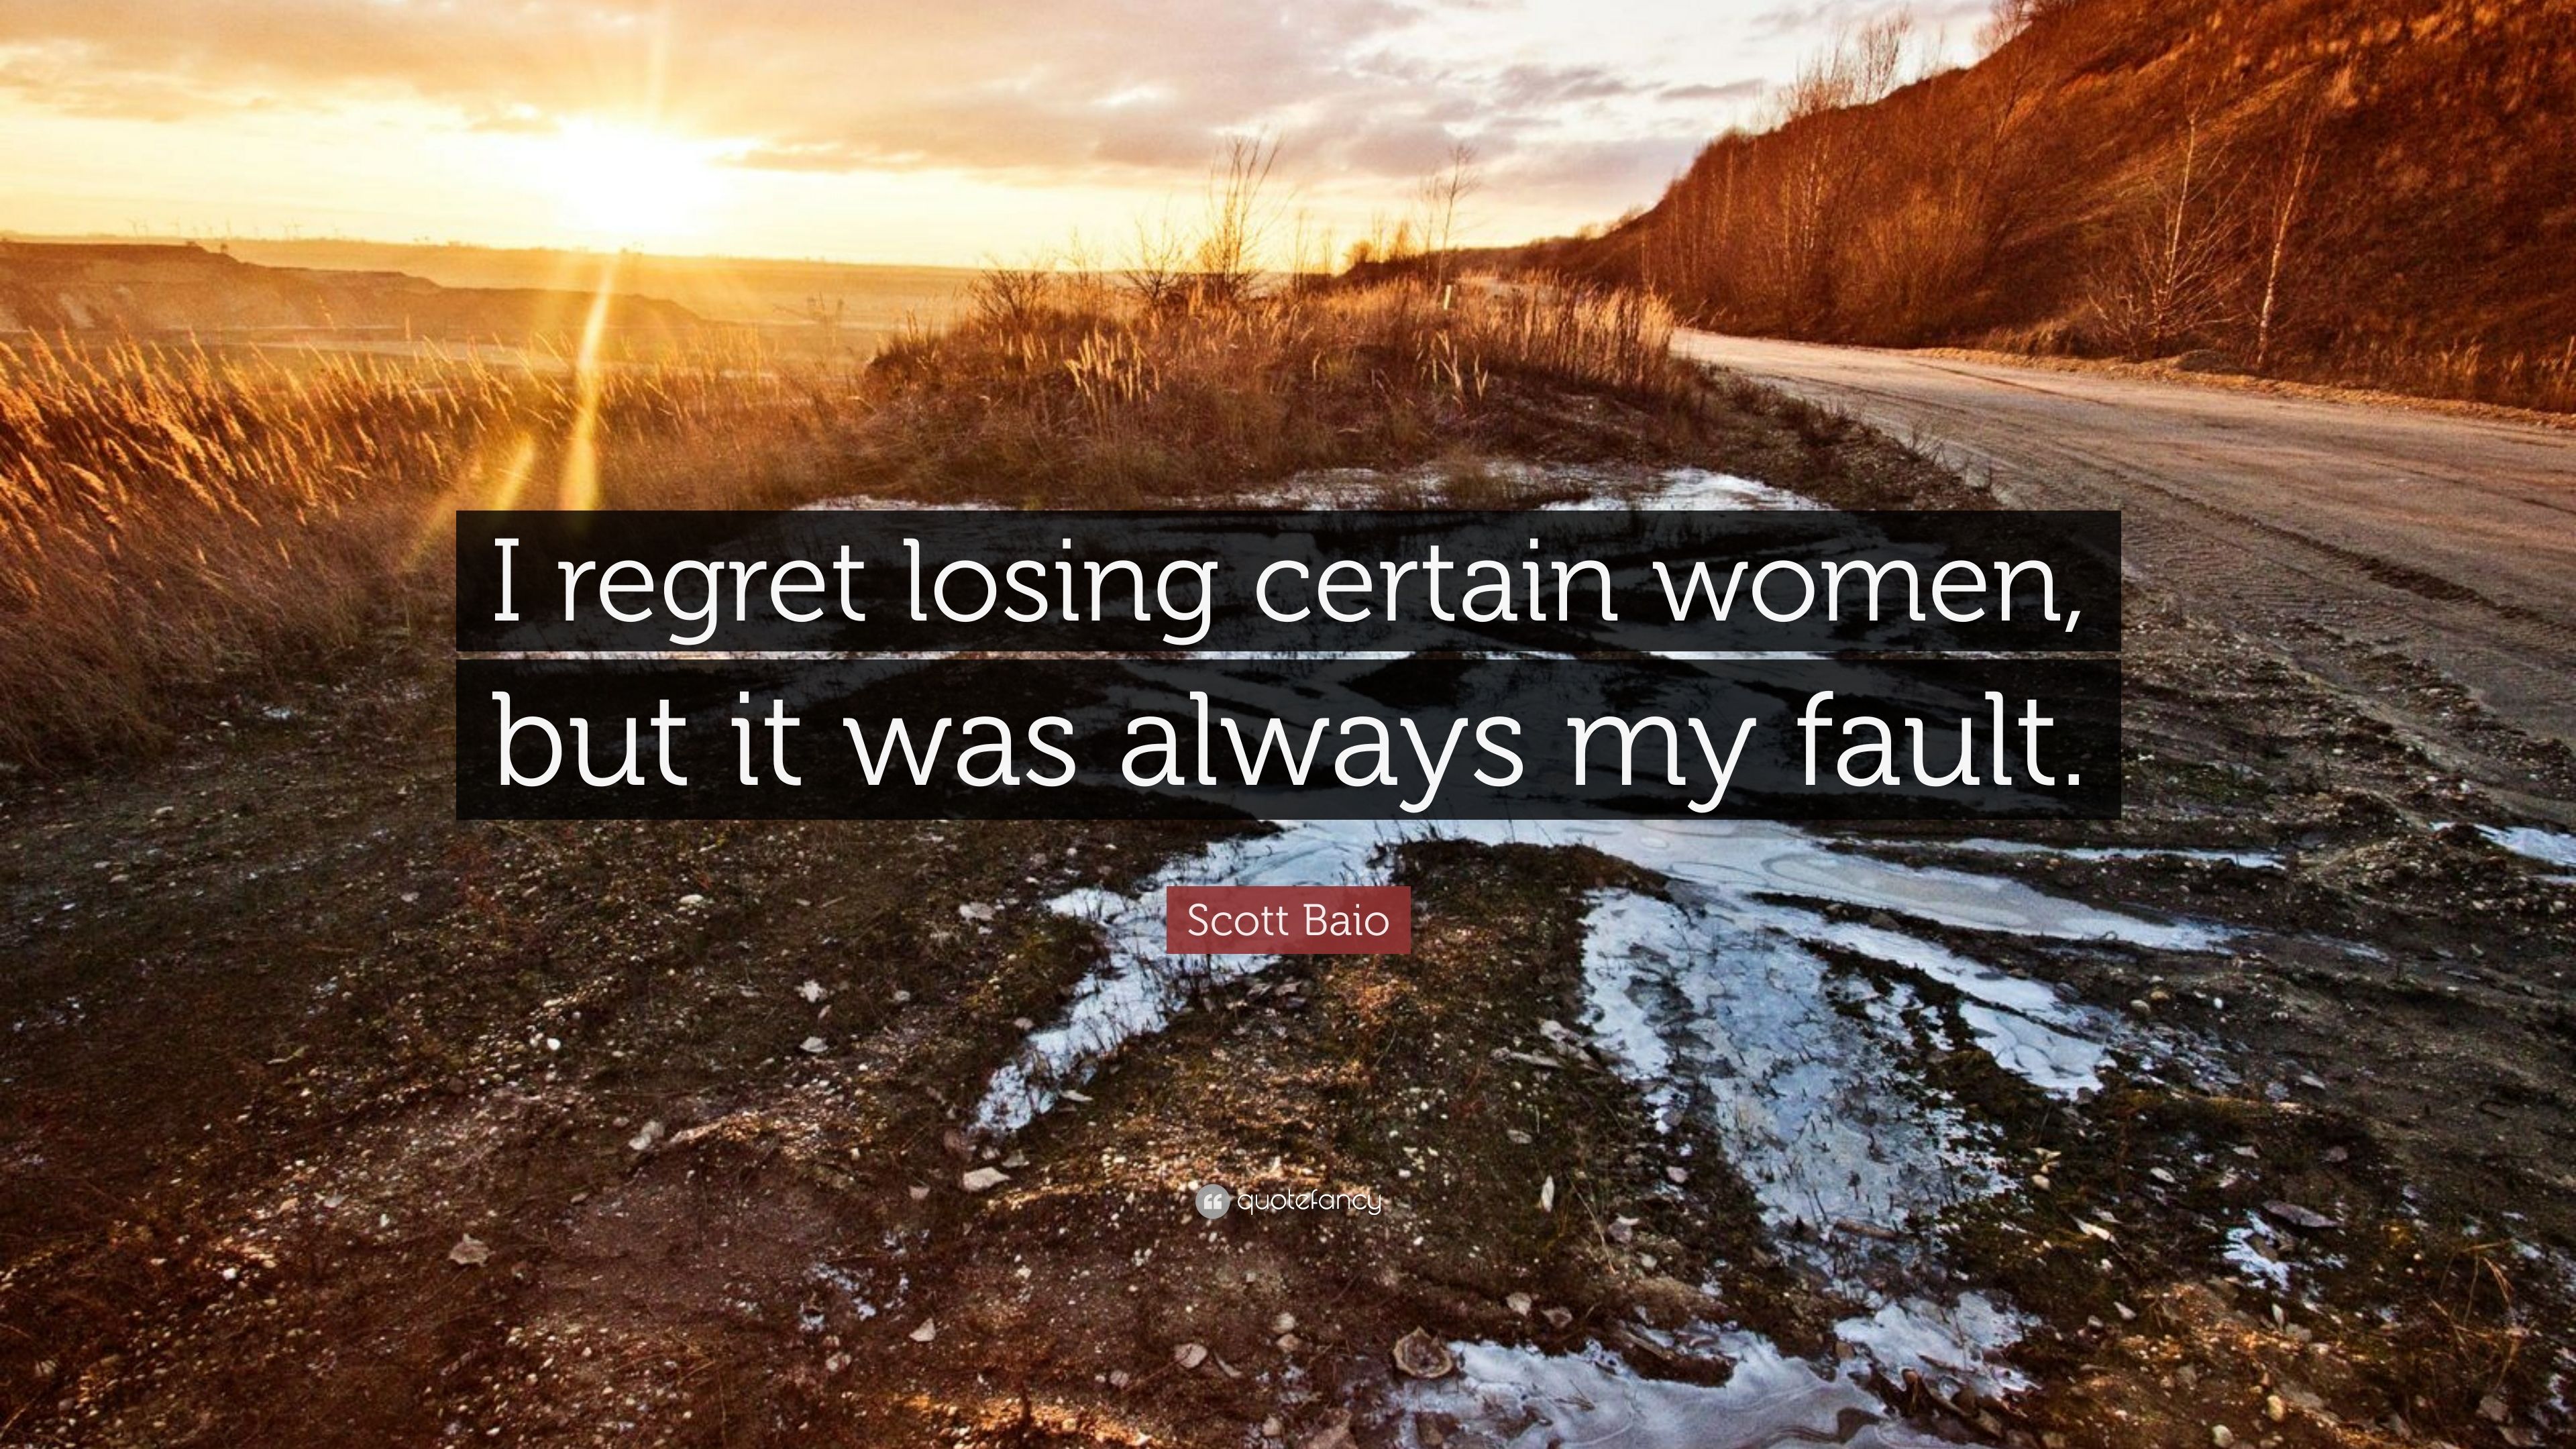 Scott Baio Quote: “I regret losing certain women, but it was